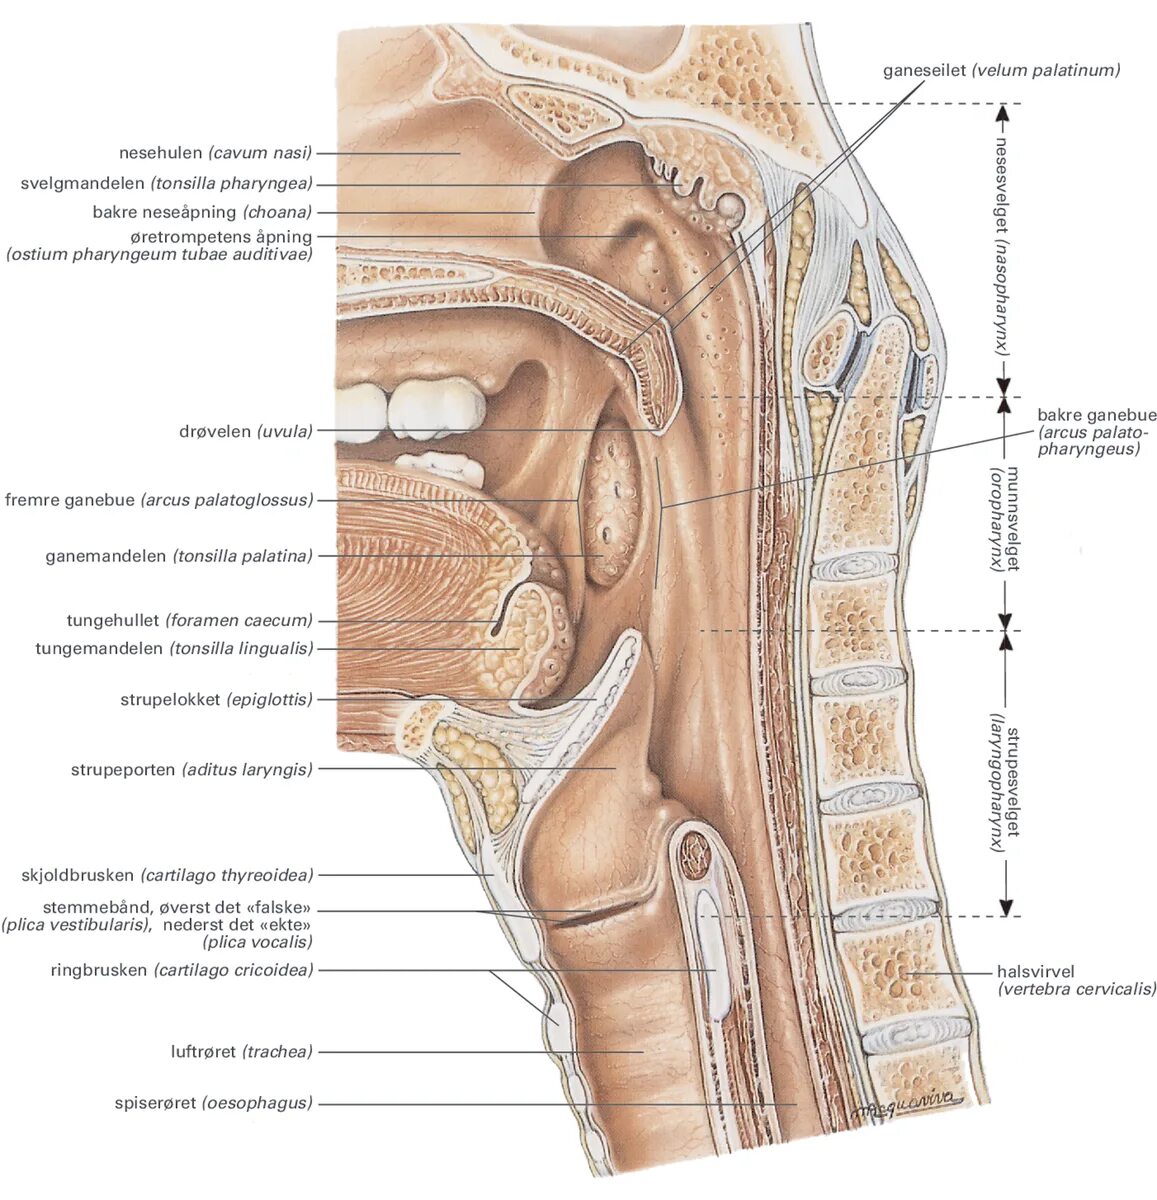 Ostium pharyngeum tubae auditivae. Tubae auditivae. Ostium pharyngeum tubae auditivae анатомия. Ostium pharyngeum tubae auditivae анатомия латынь.